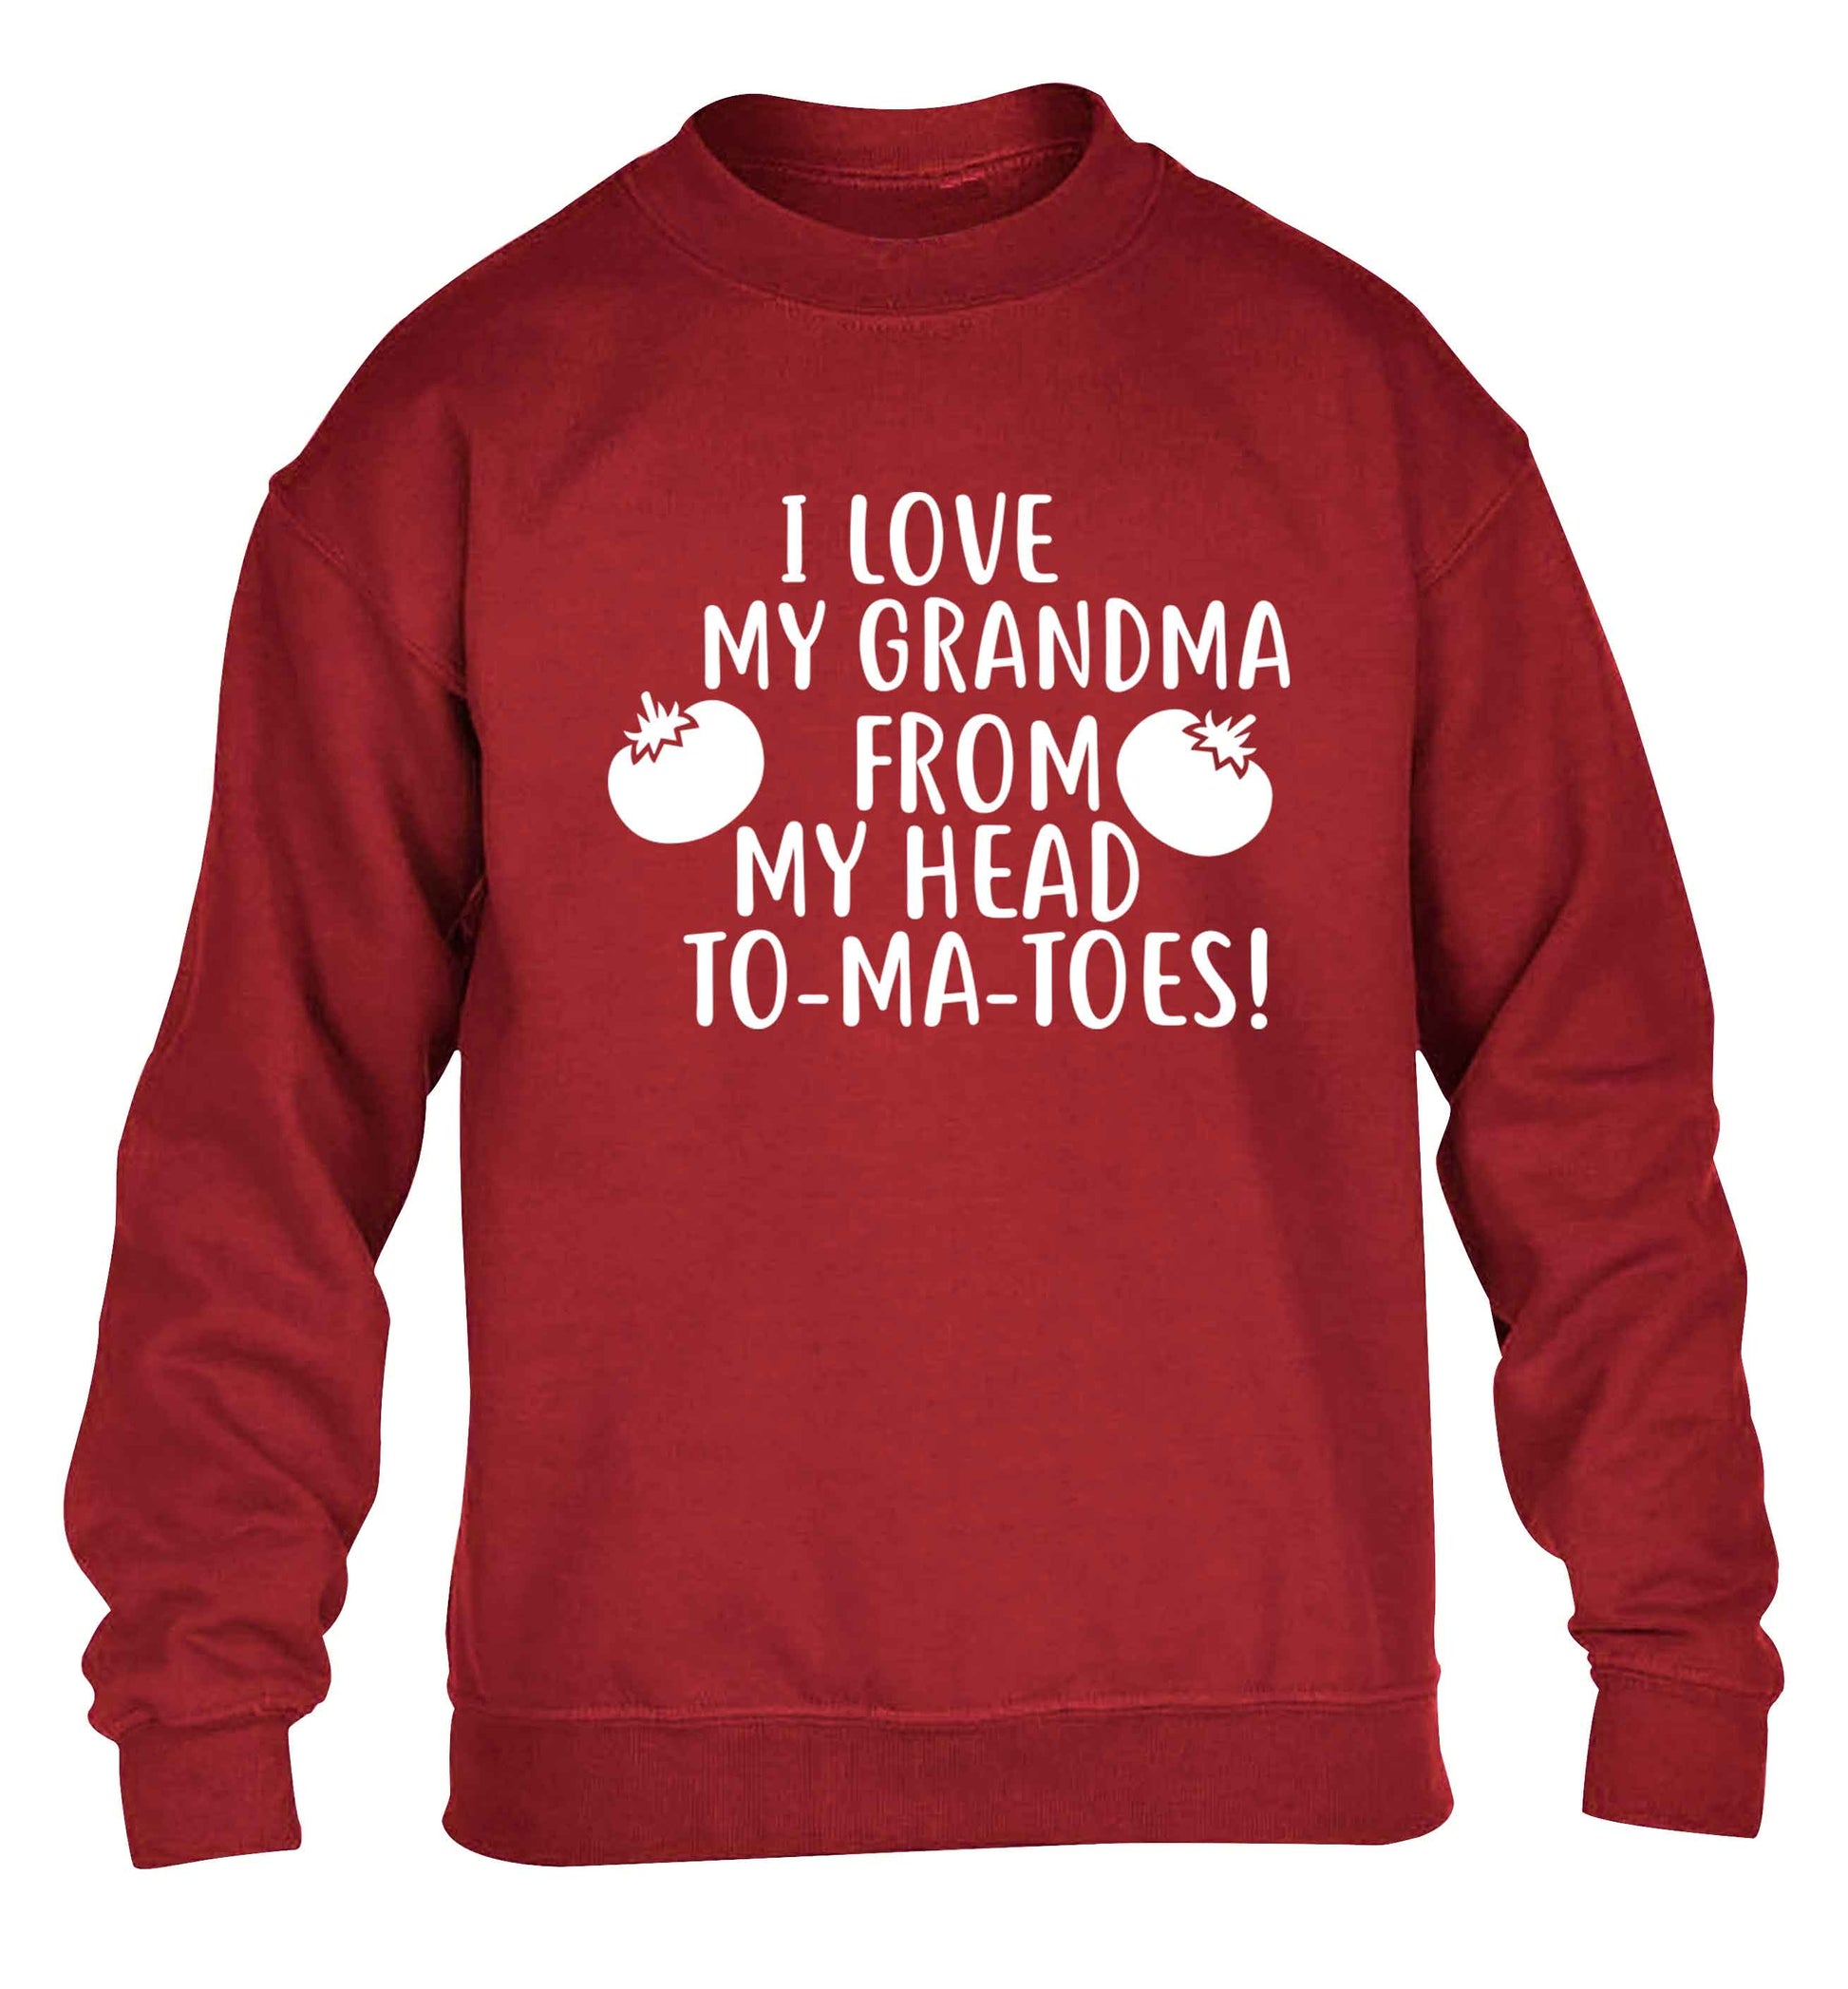 I love my grandma from my head to-ma-toes children's grey sweater 12-13 Years